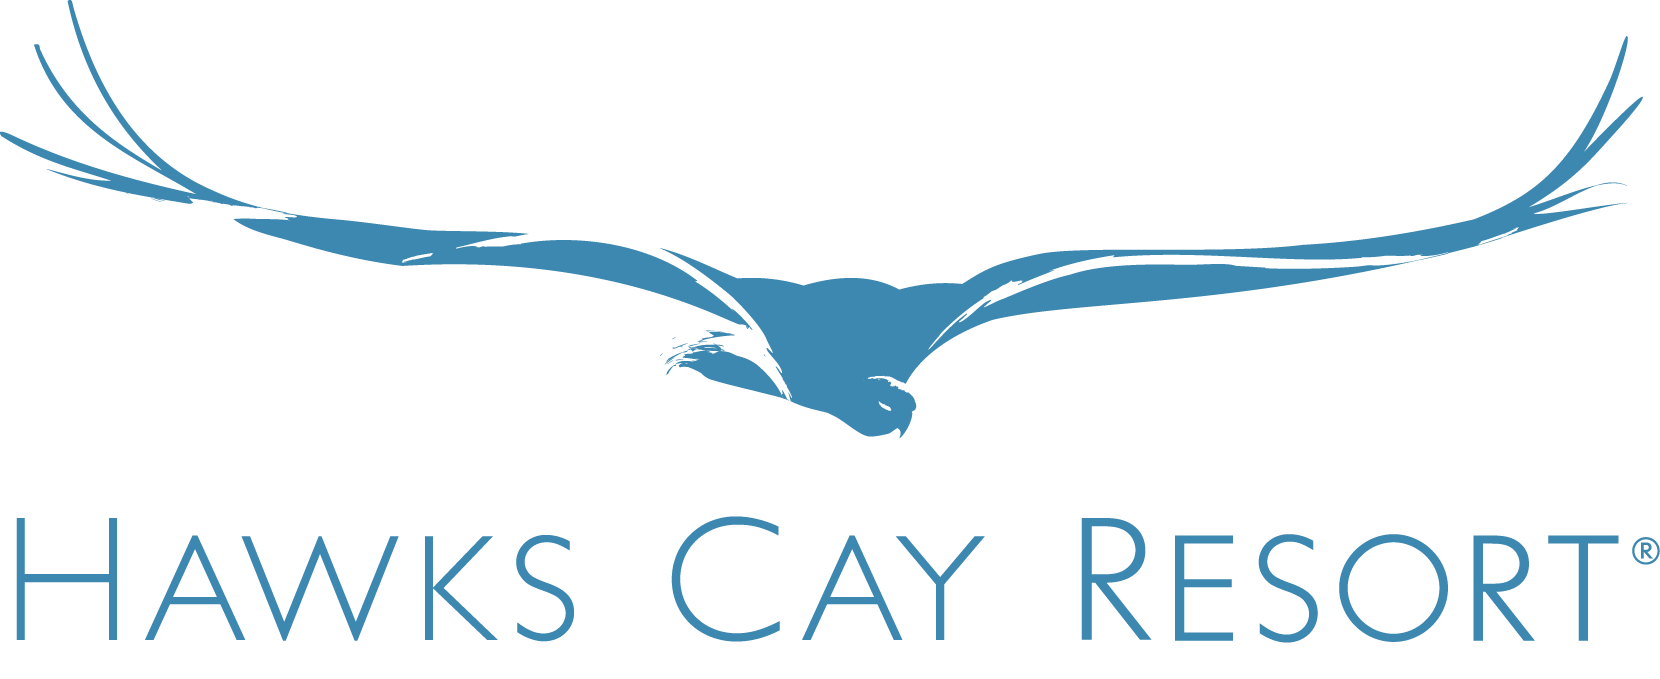 Hawks Cay Resort, Duck Key, FL Jobs | Hospitality Online